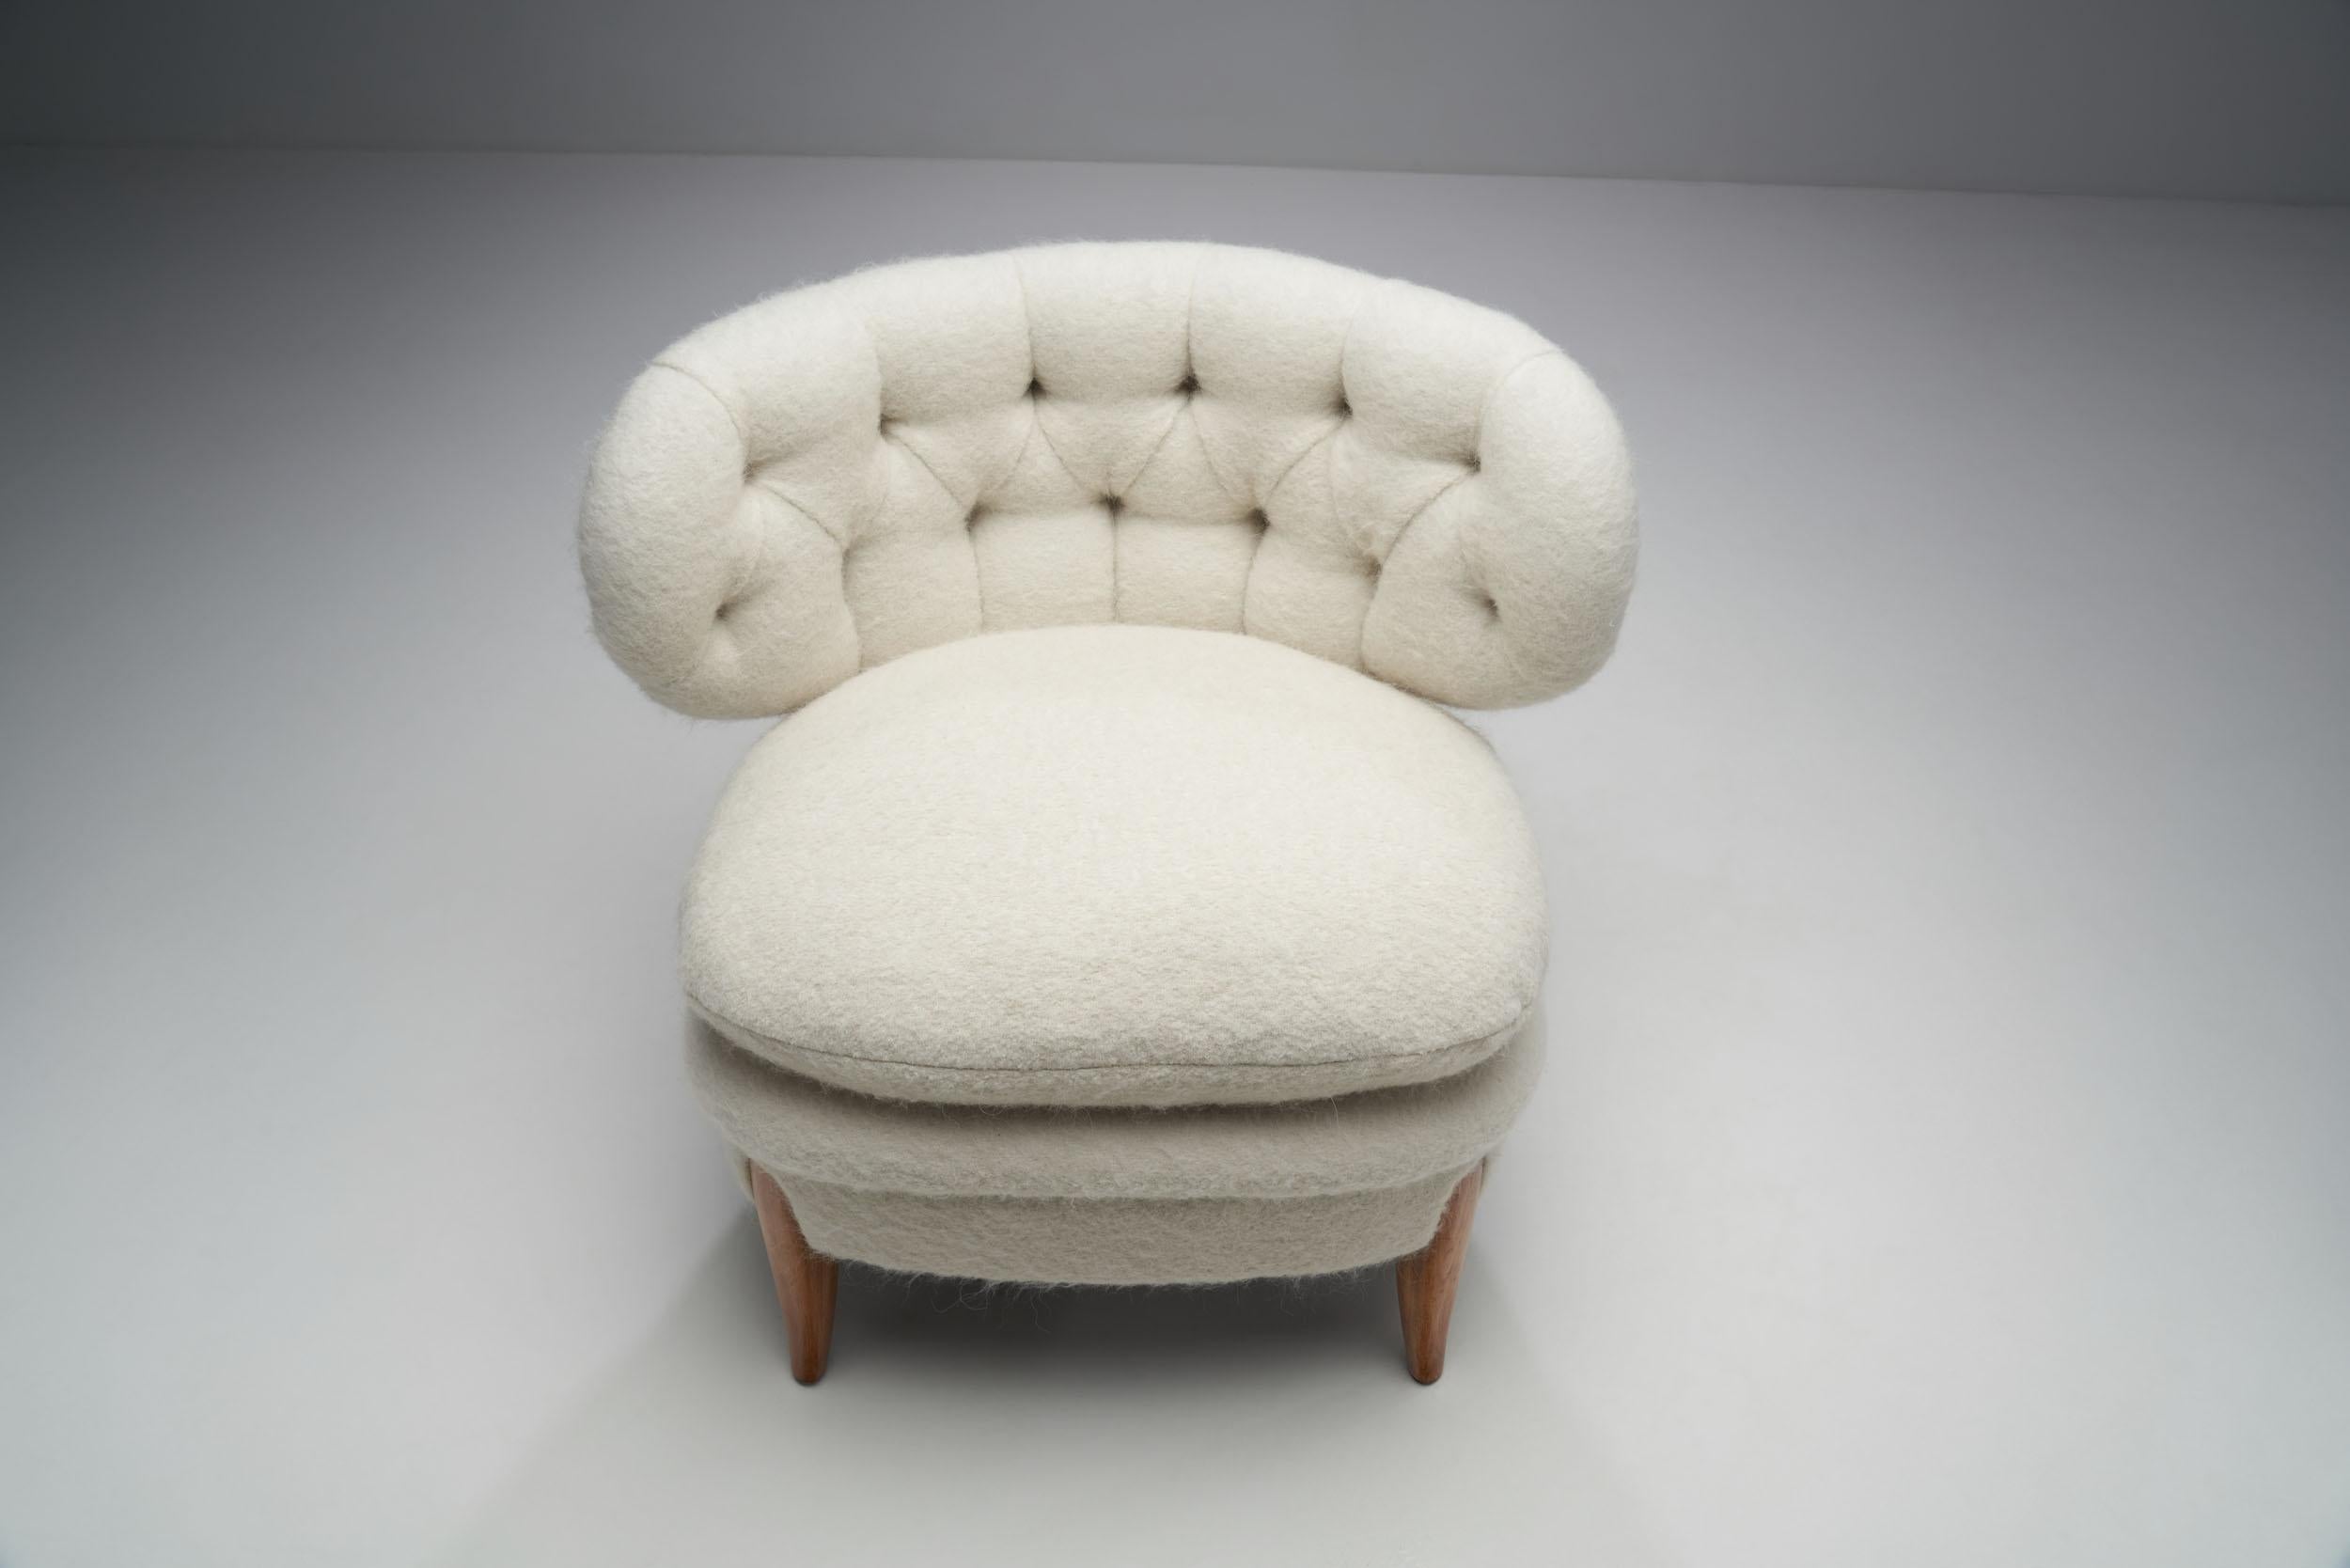 Wool “Schulz” Lounge Chair by Otto Schulz for Jio Möbler Jönköping, Sweden 1940s